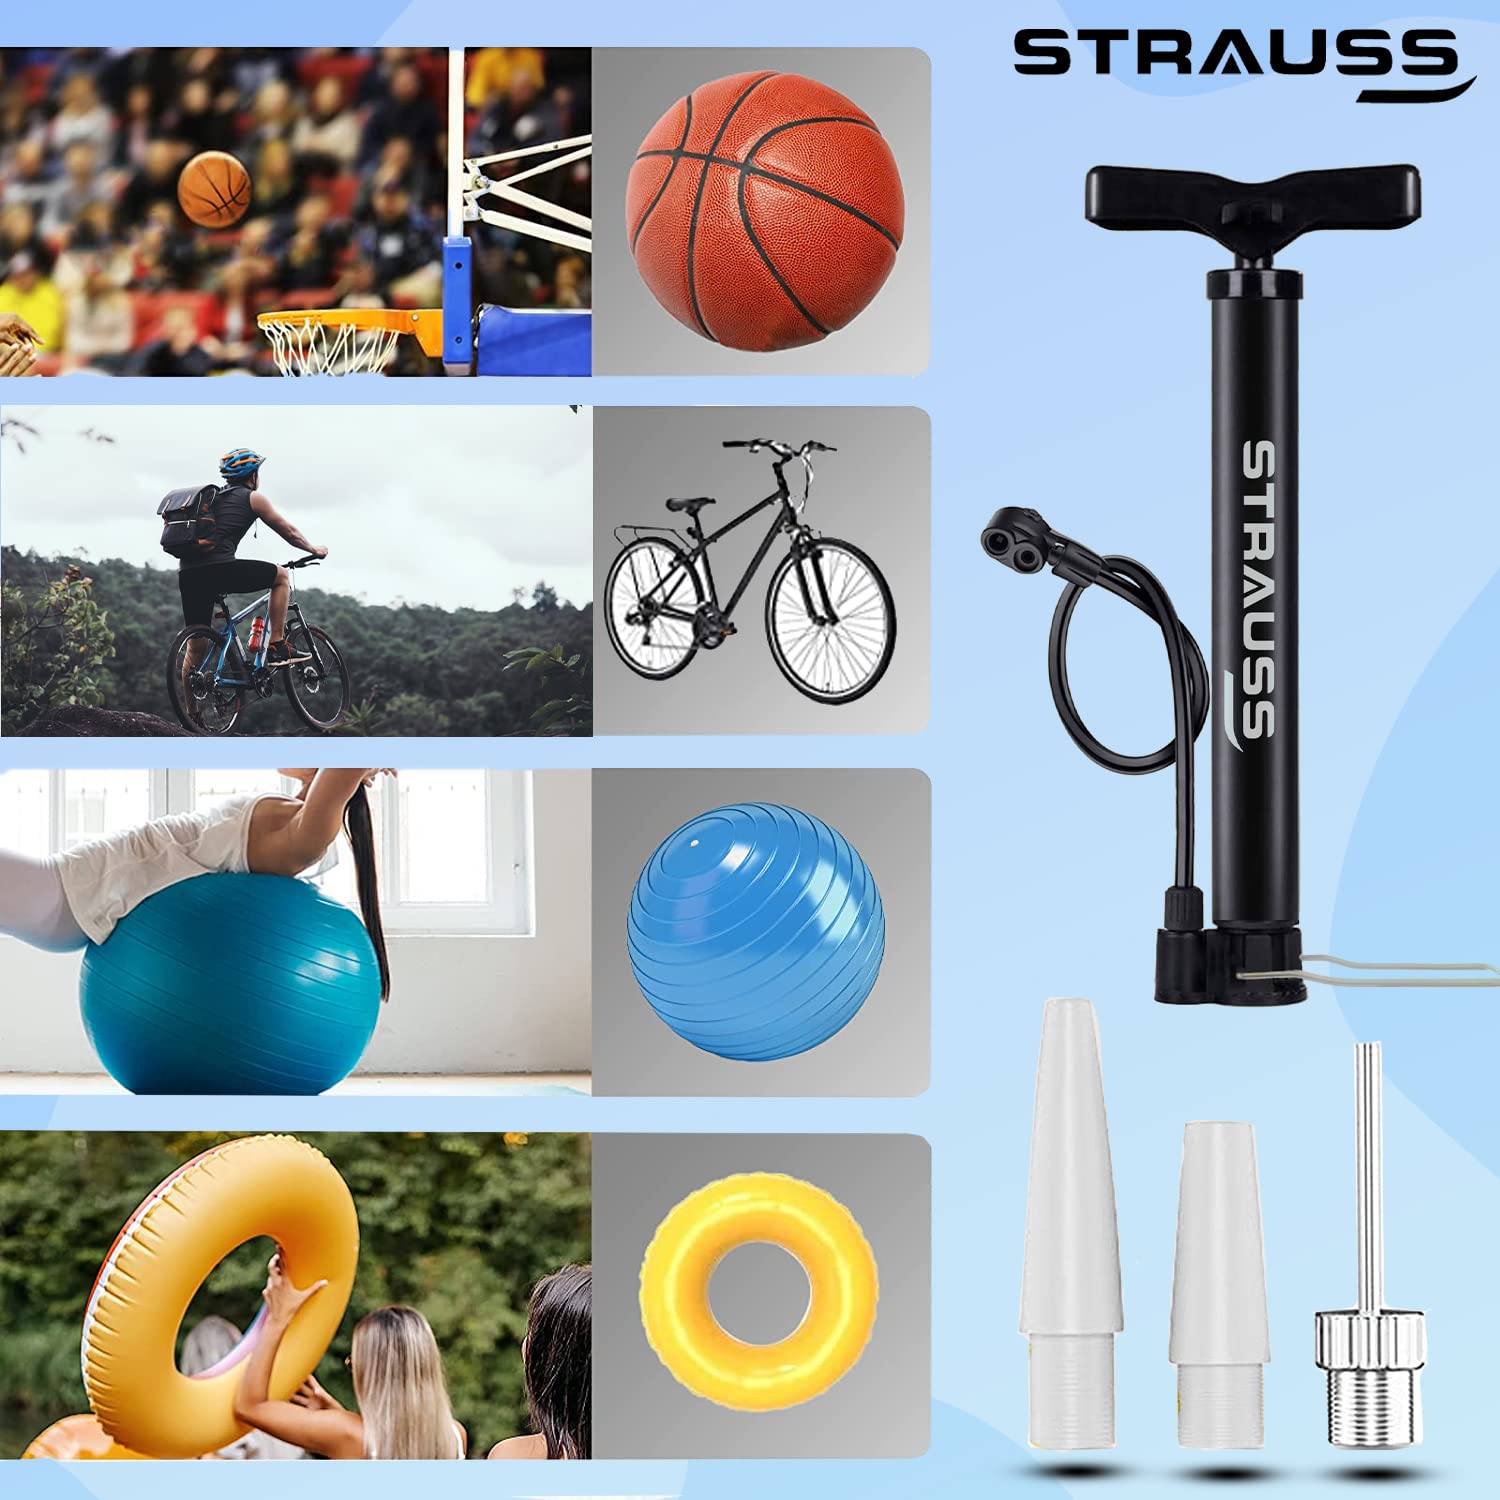 Strauss High Pressure Multipurpose Air Pump | Inflatable Air Pump | Floor Air Pumps for Bicycle, Car, Ball, Motorcycle,(Yellow)